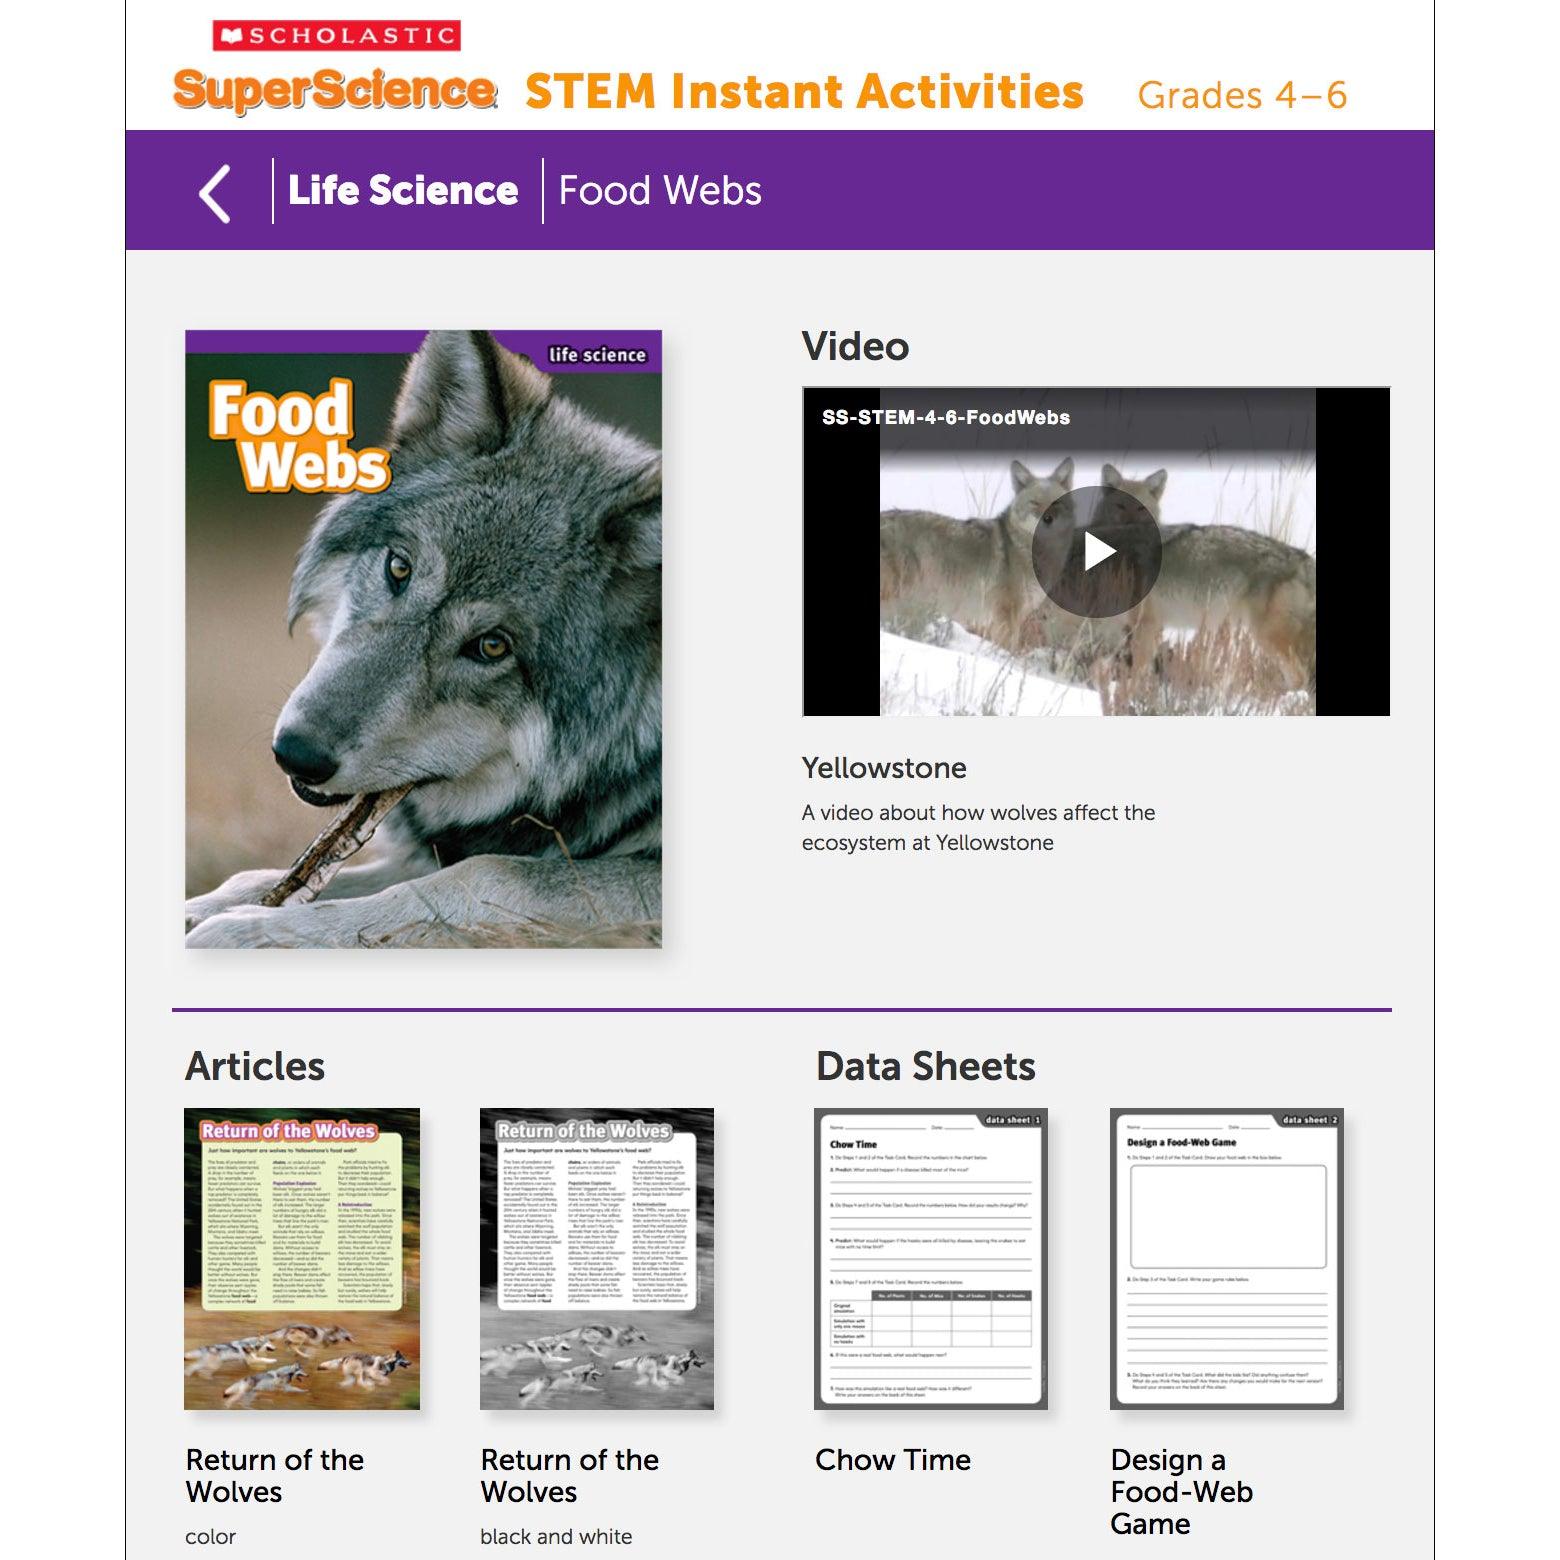 SuperScience STEM Instant Activities, Grades 4-6 - Loomini